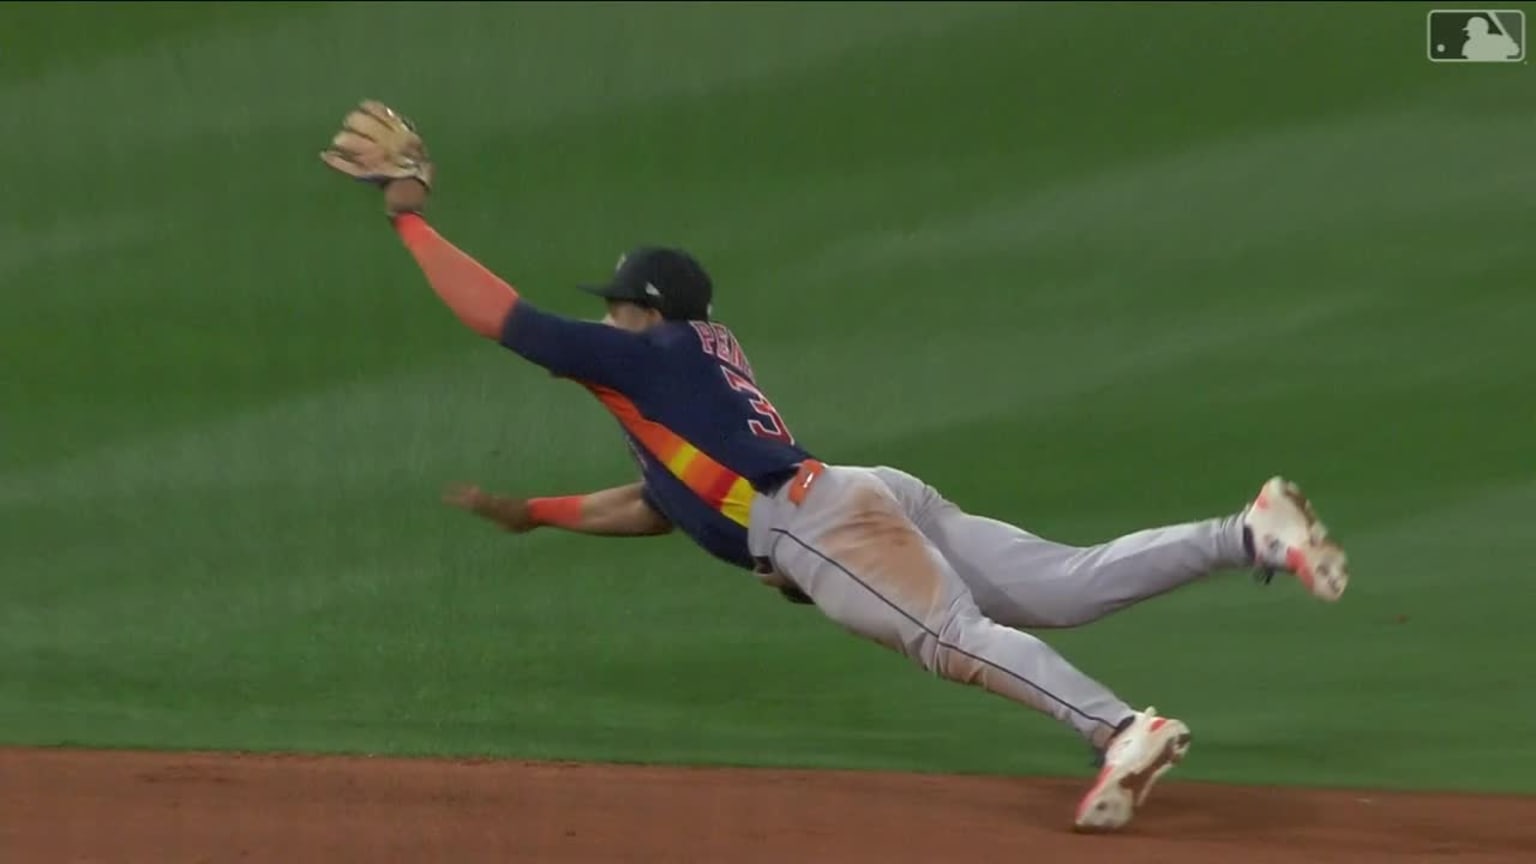 Jeremy Peña makes a diving grab to kickstart the Astros' double